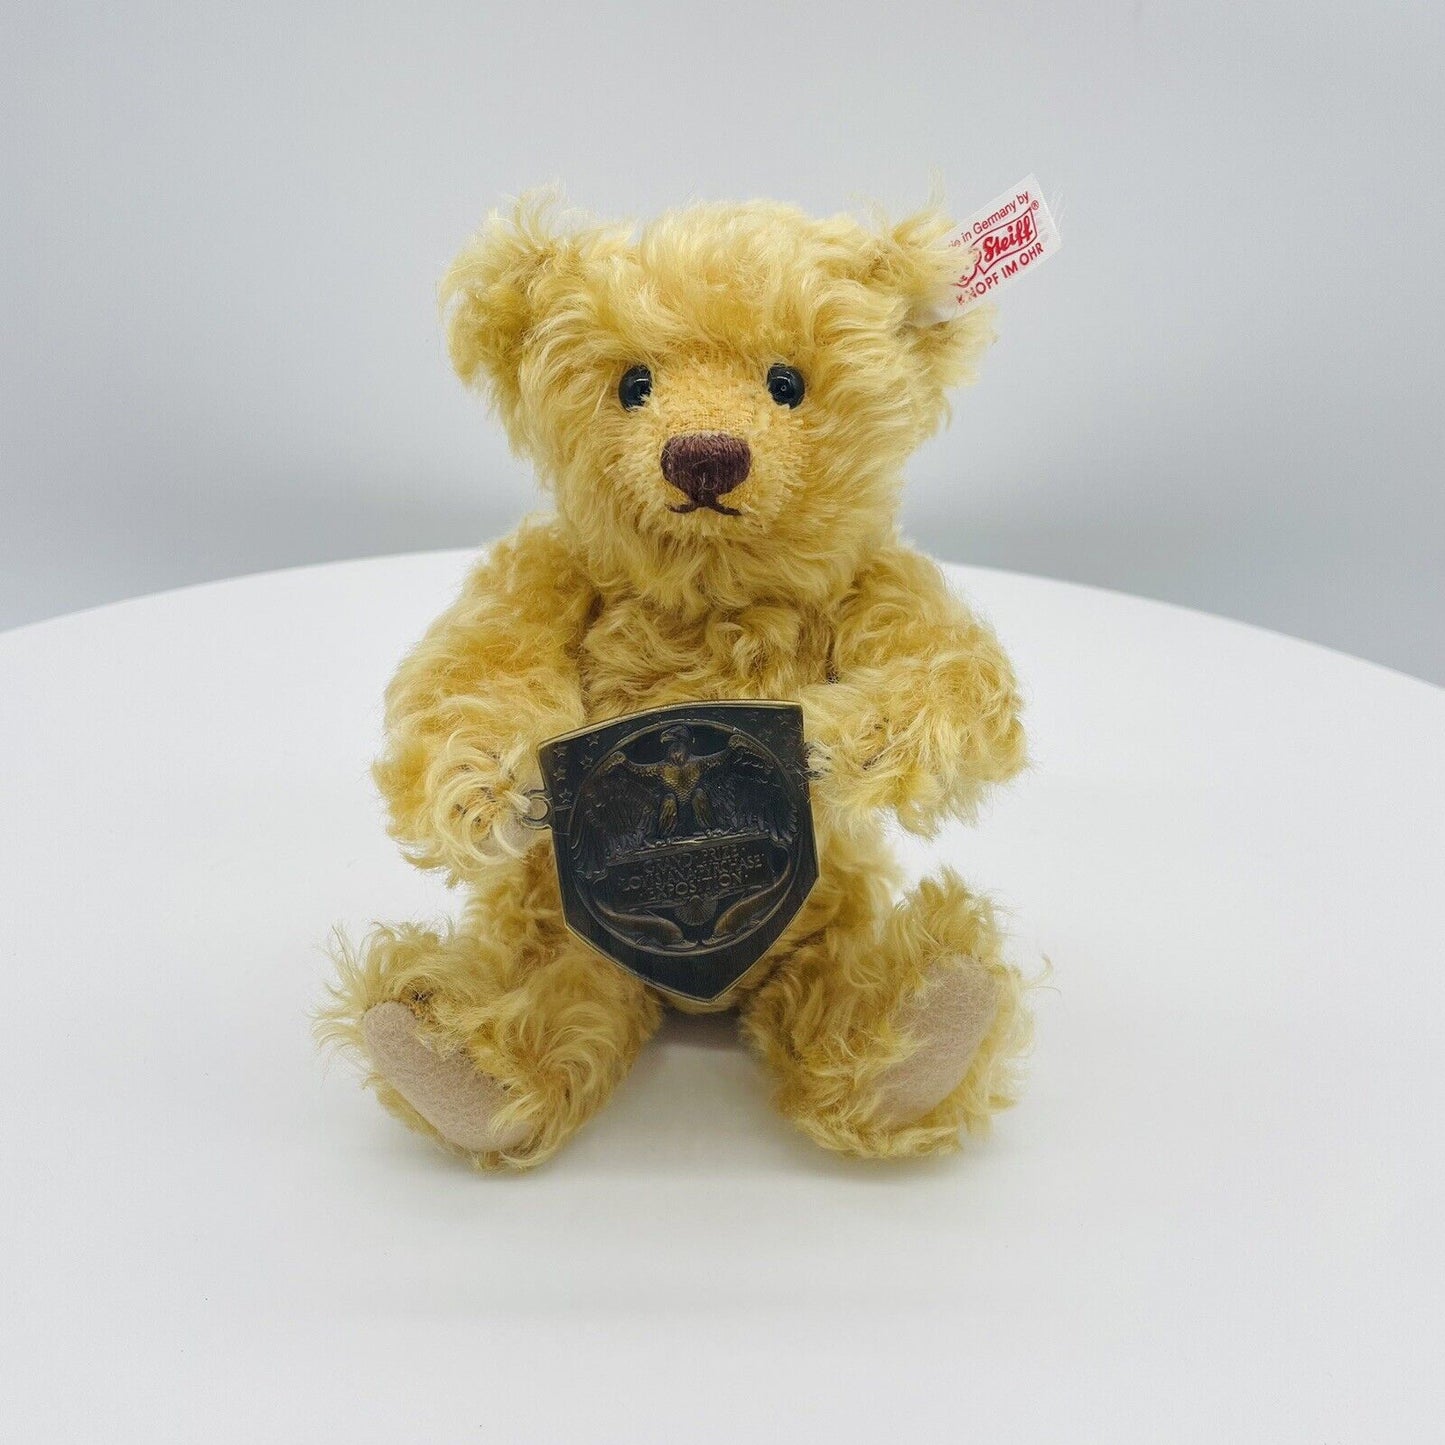 Steiff Teddybär Exhibition Bear 661419 limitiert 1500 aus 2004 UK exklusiv 20cm